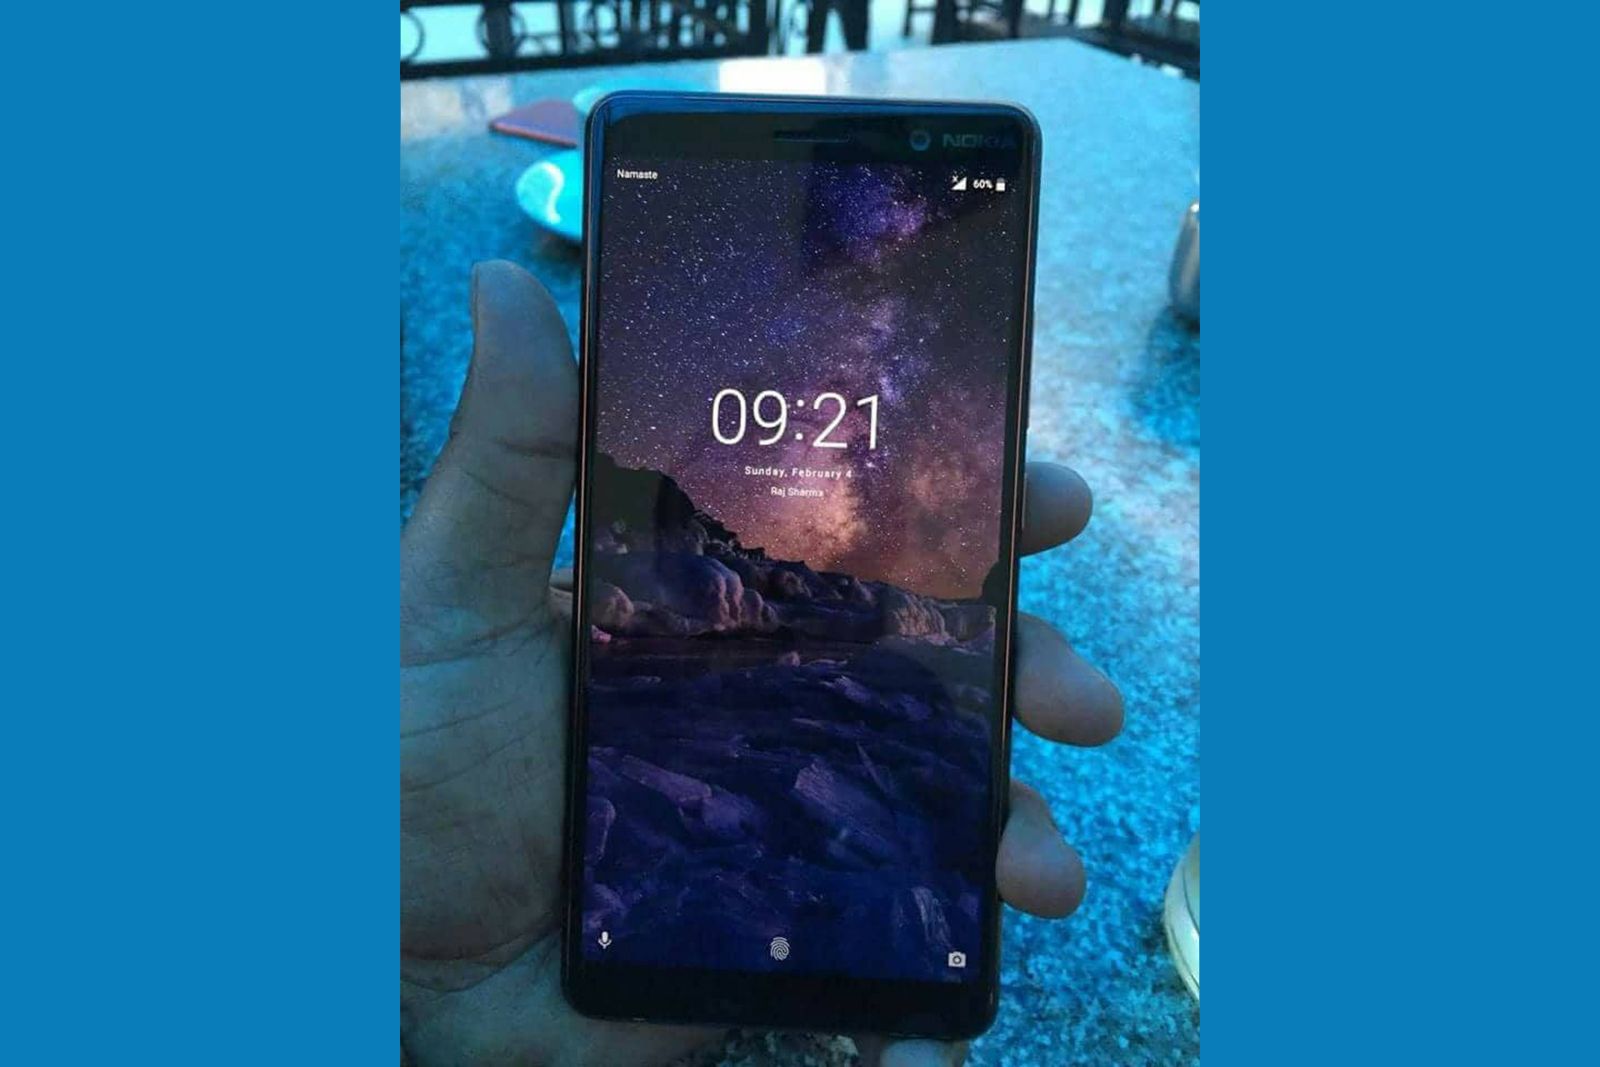 Amazing Nokia 7 Plus hands-on pic leaks image 1